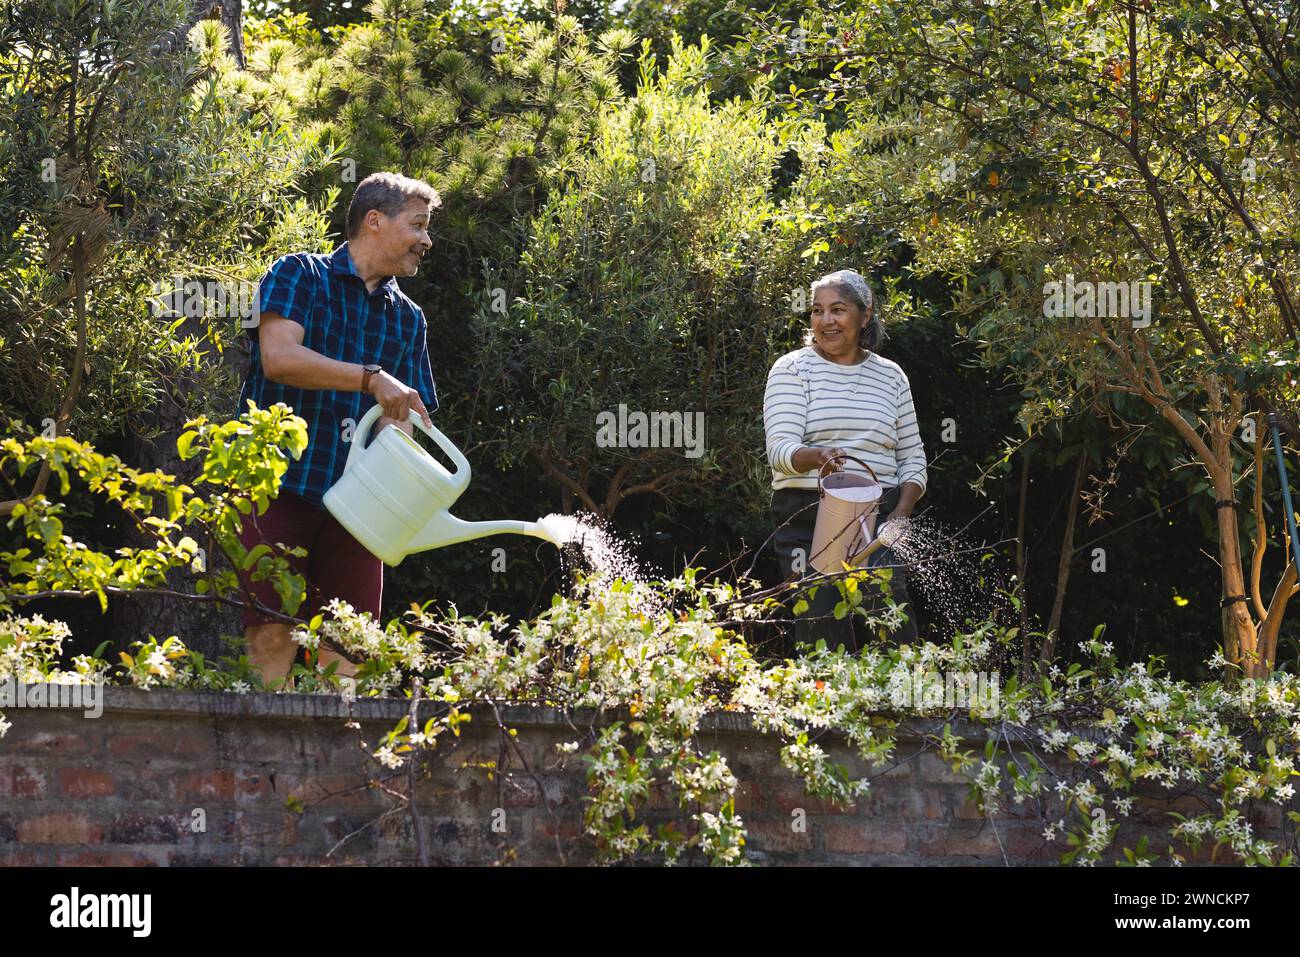 Senior biracial woman and man are tending to garden plants Stock Photo